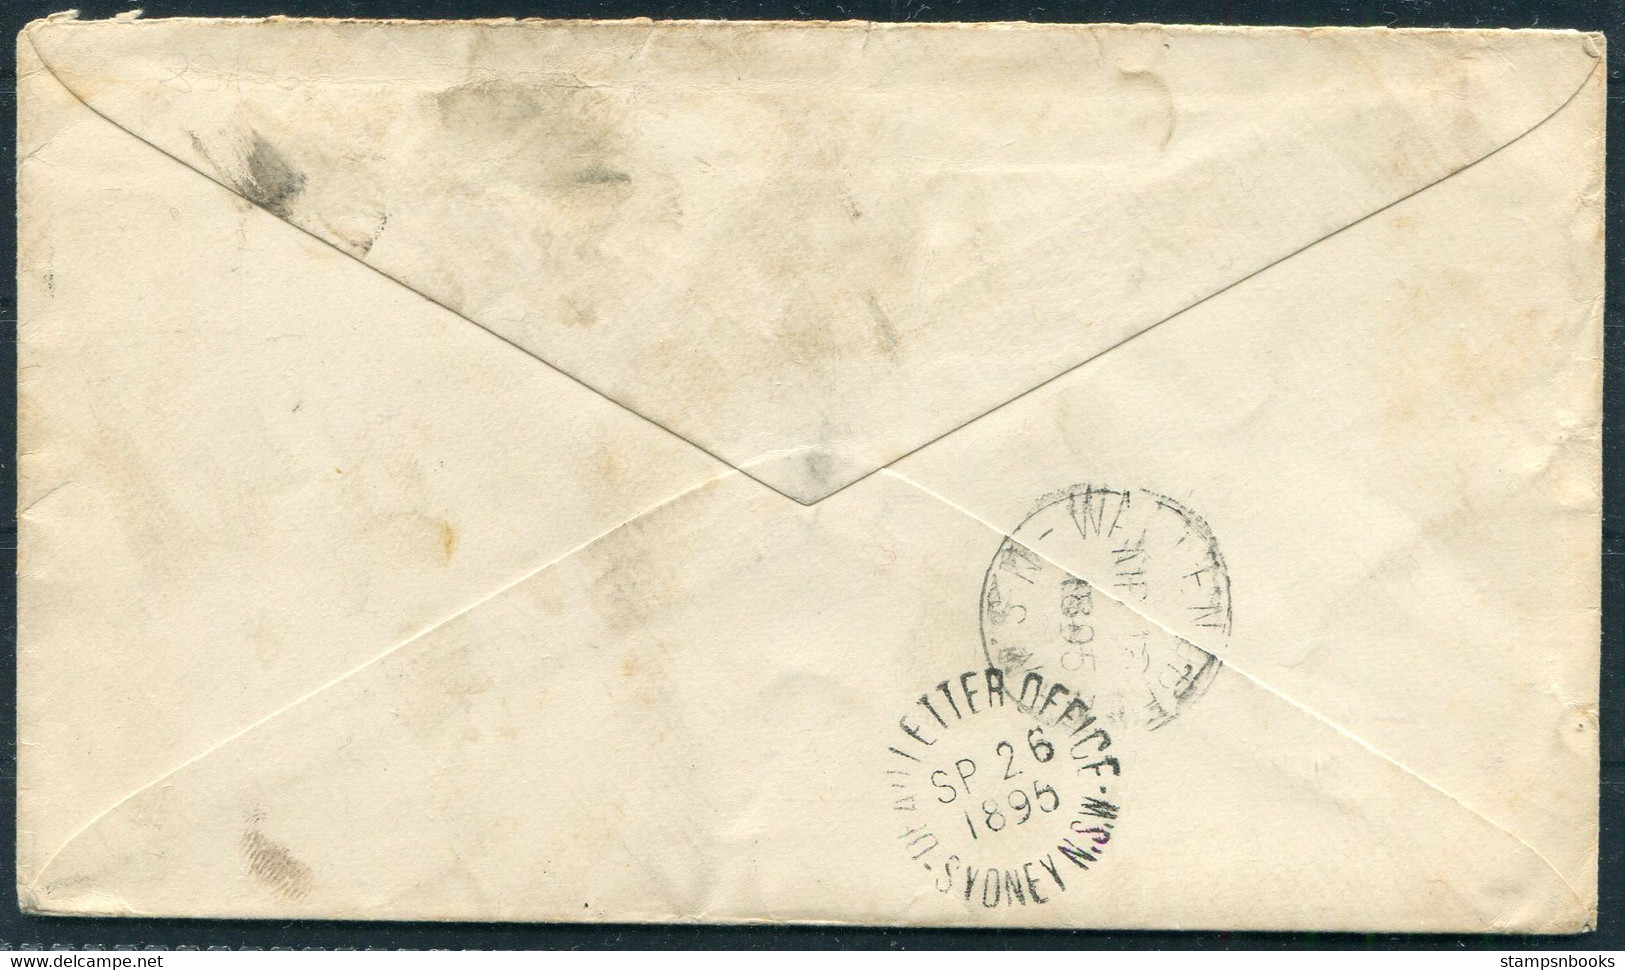 1895 Australia, New South Wales Stationery Cover Sydney - Wallendbeen "UNCLAIMED" Dead Letter Office D.L.O. - Brieven En Documenten